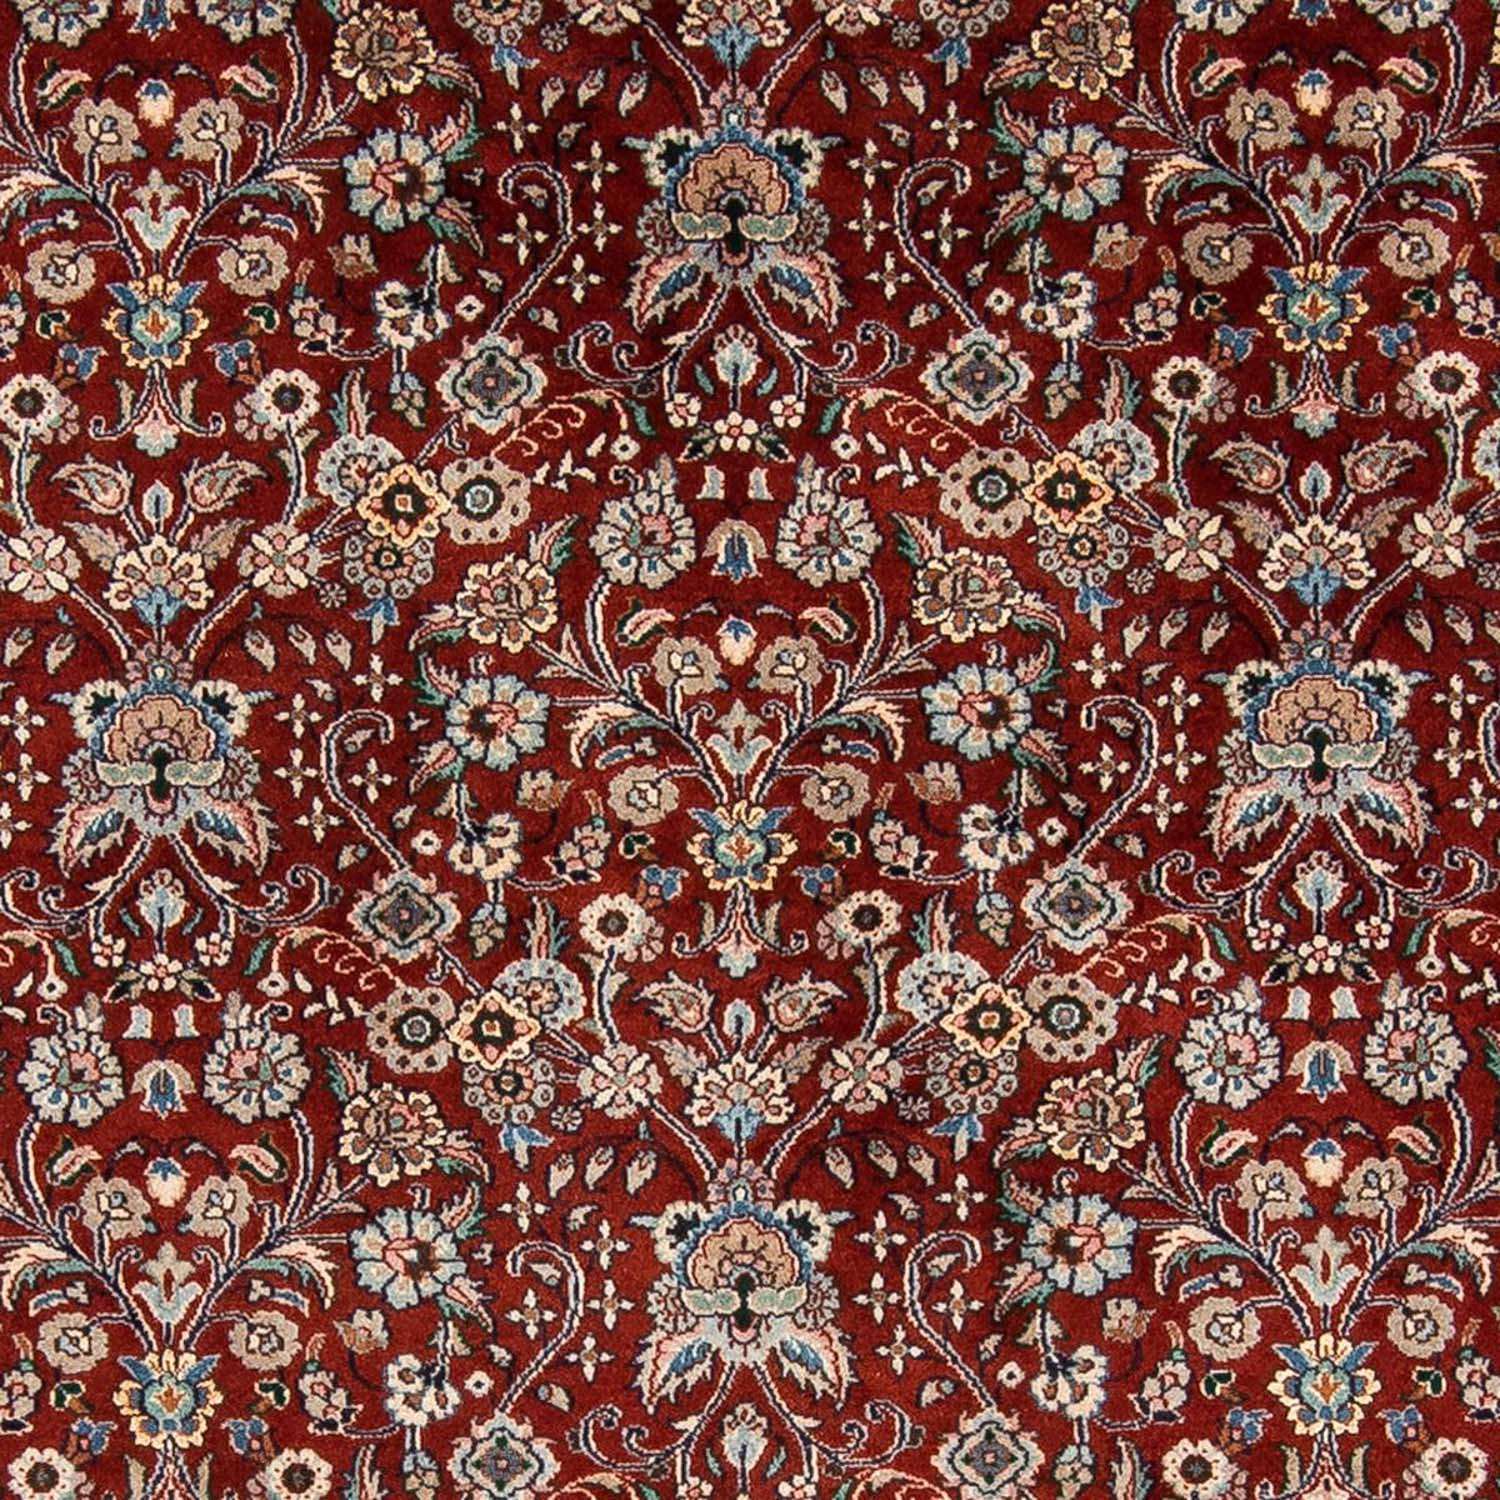 Tapis persan - Classique - 290 x 197 cm - rouge